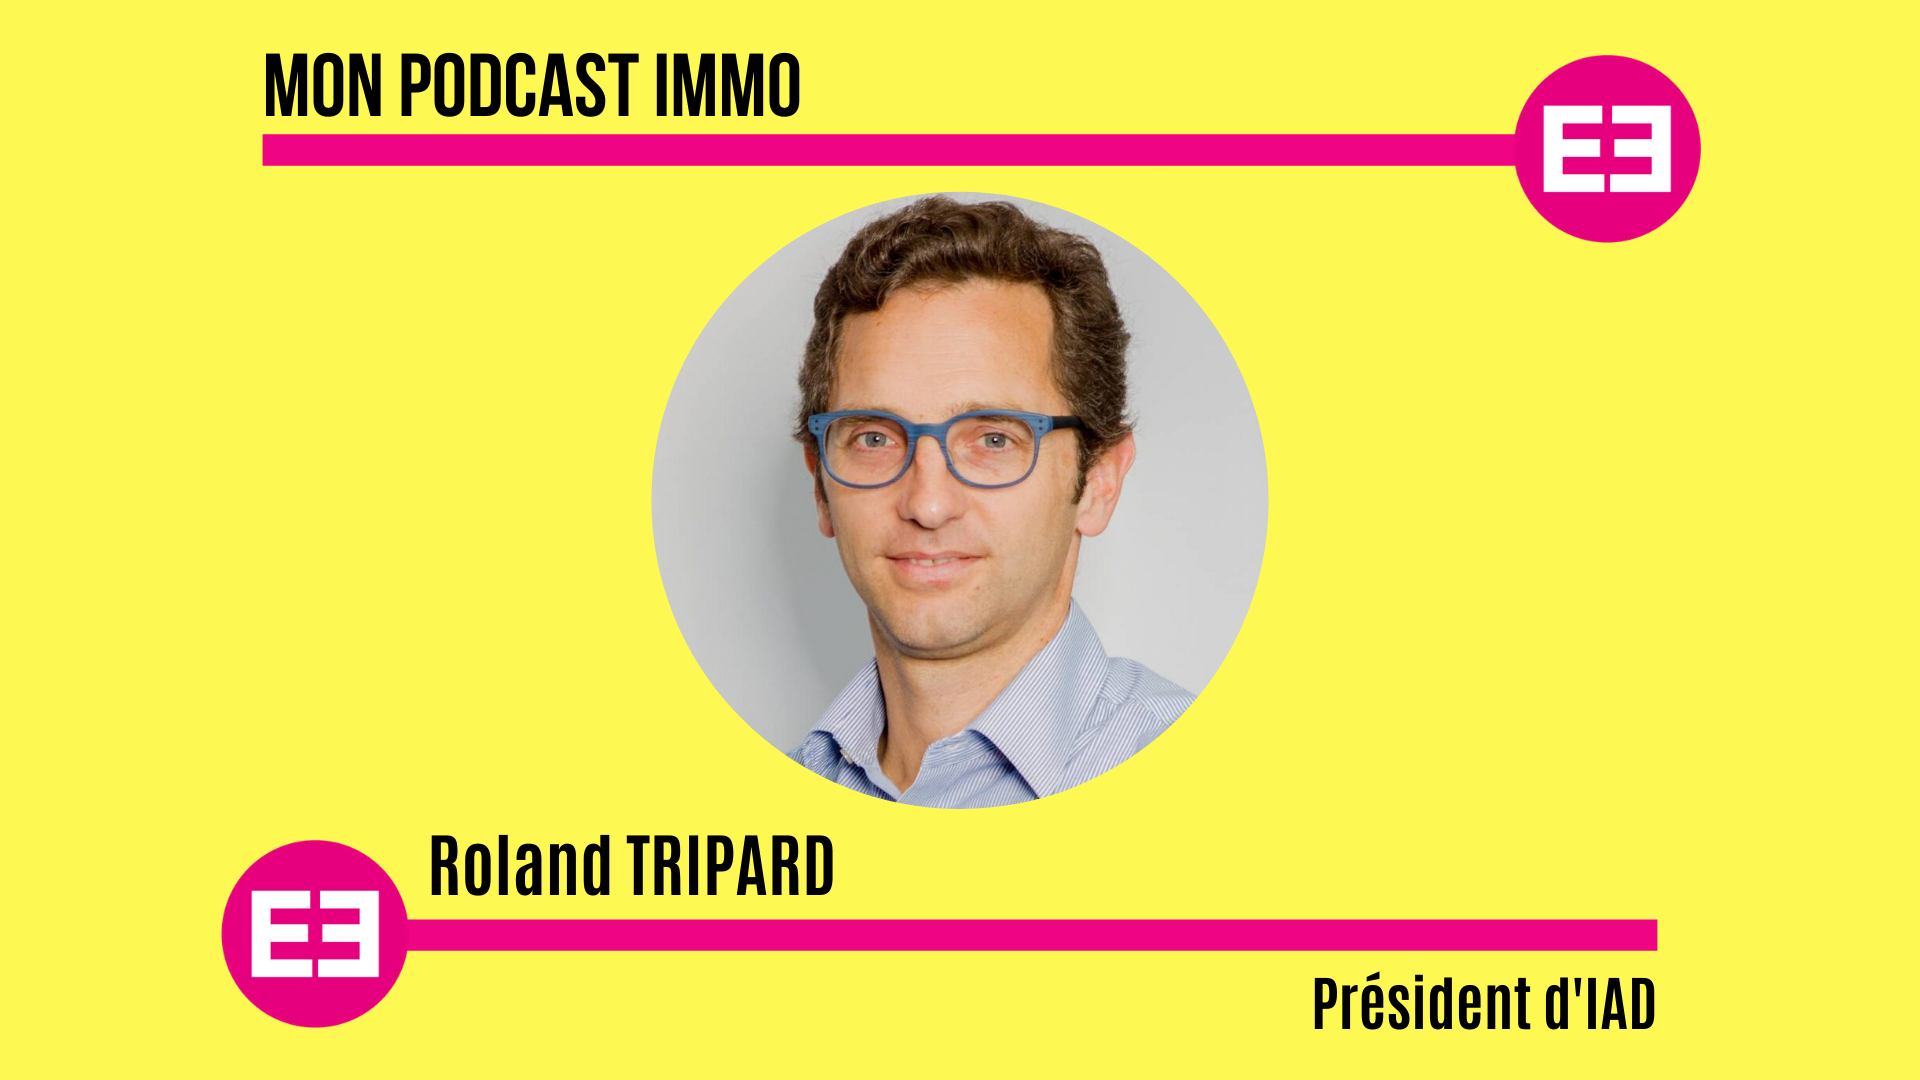 Roland Tripard